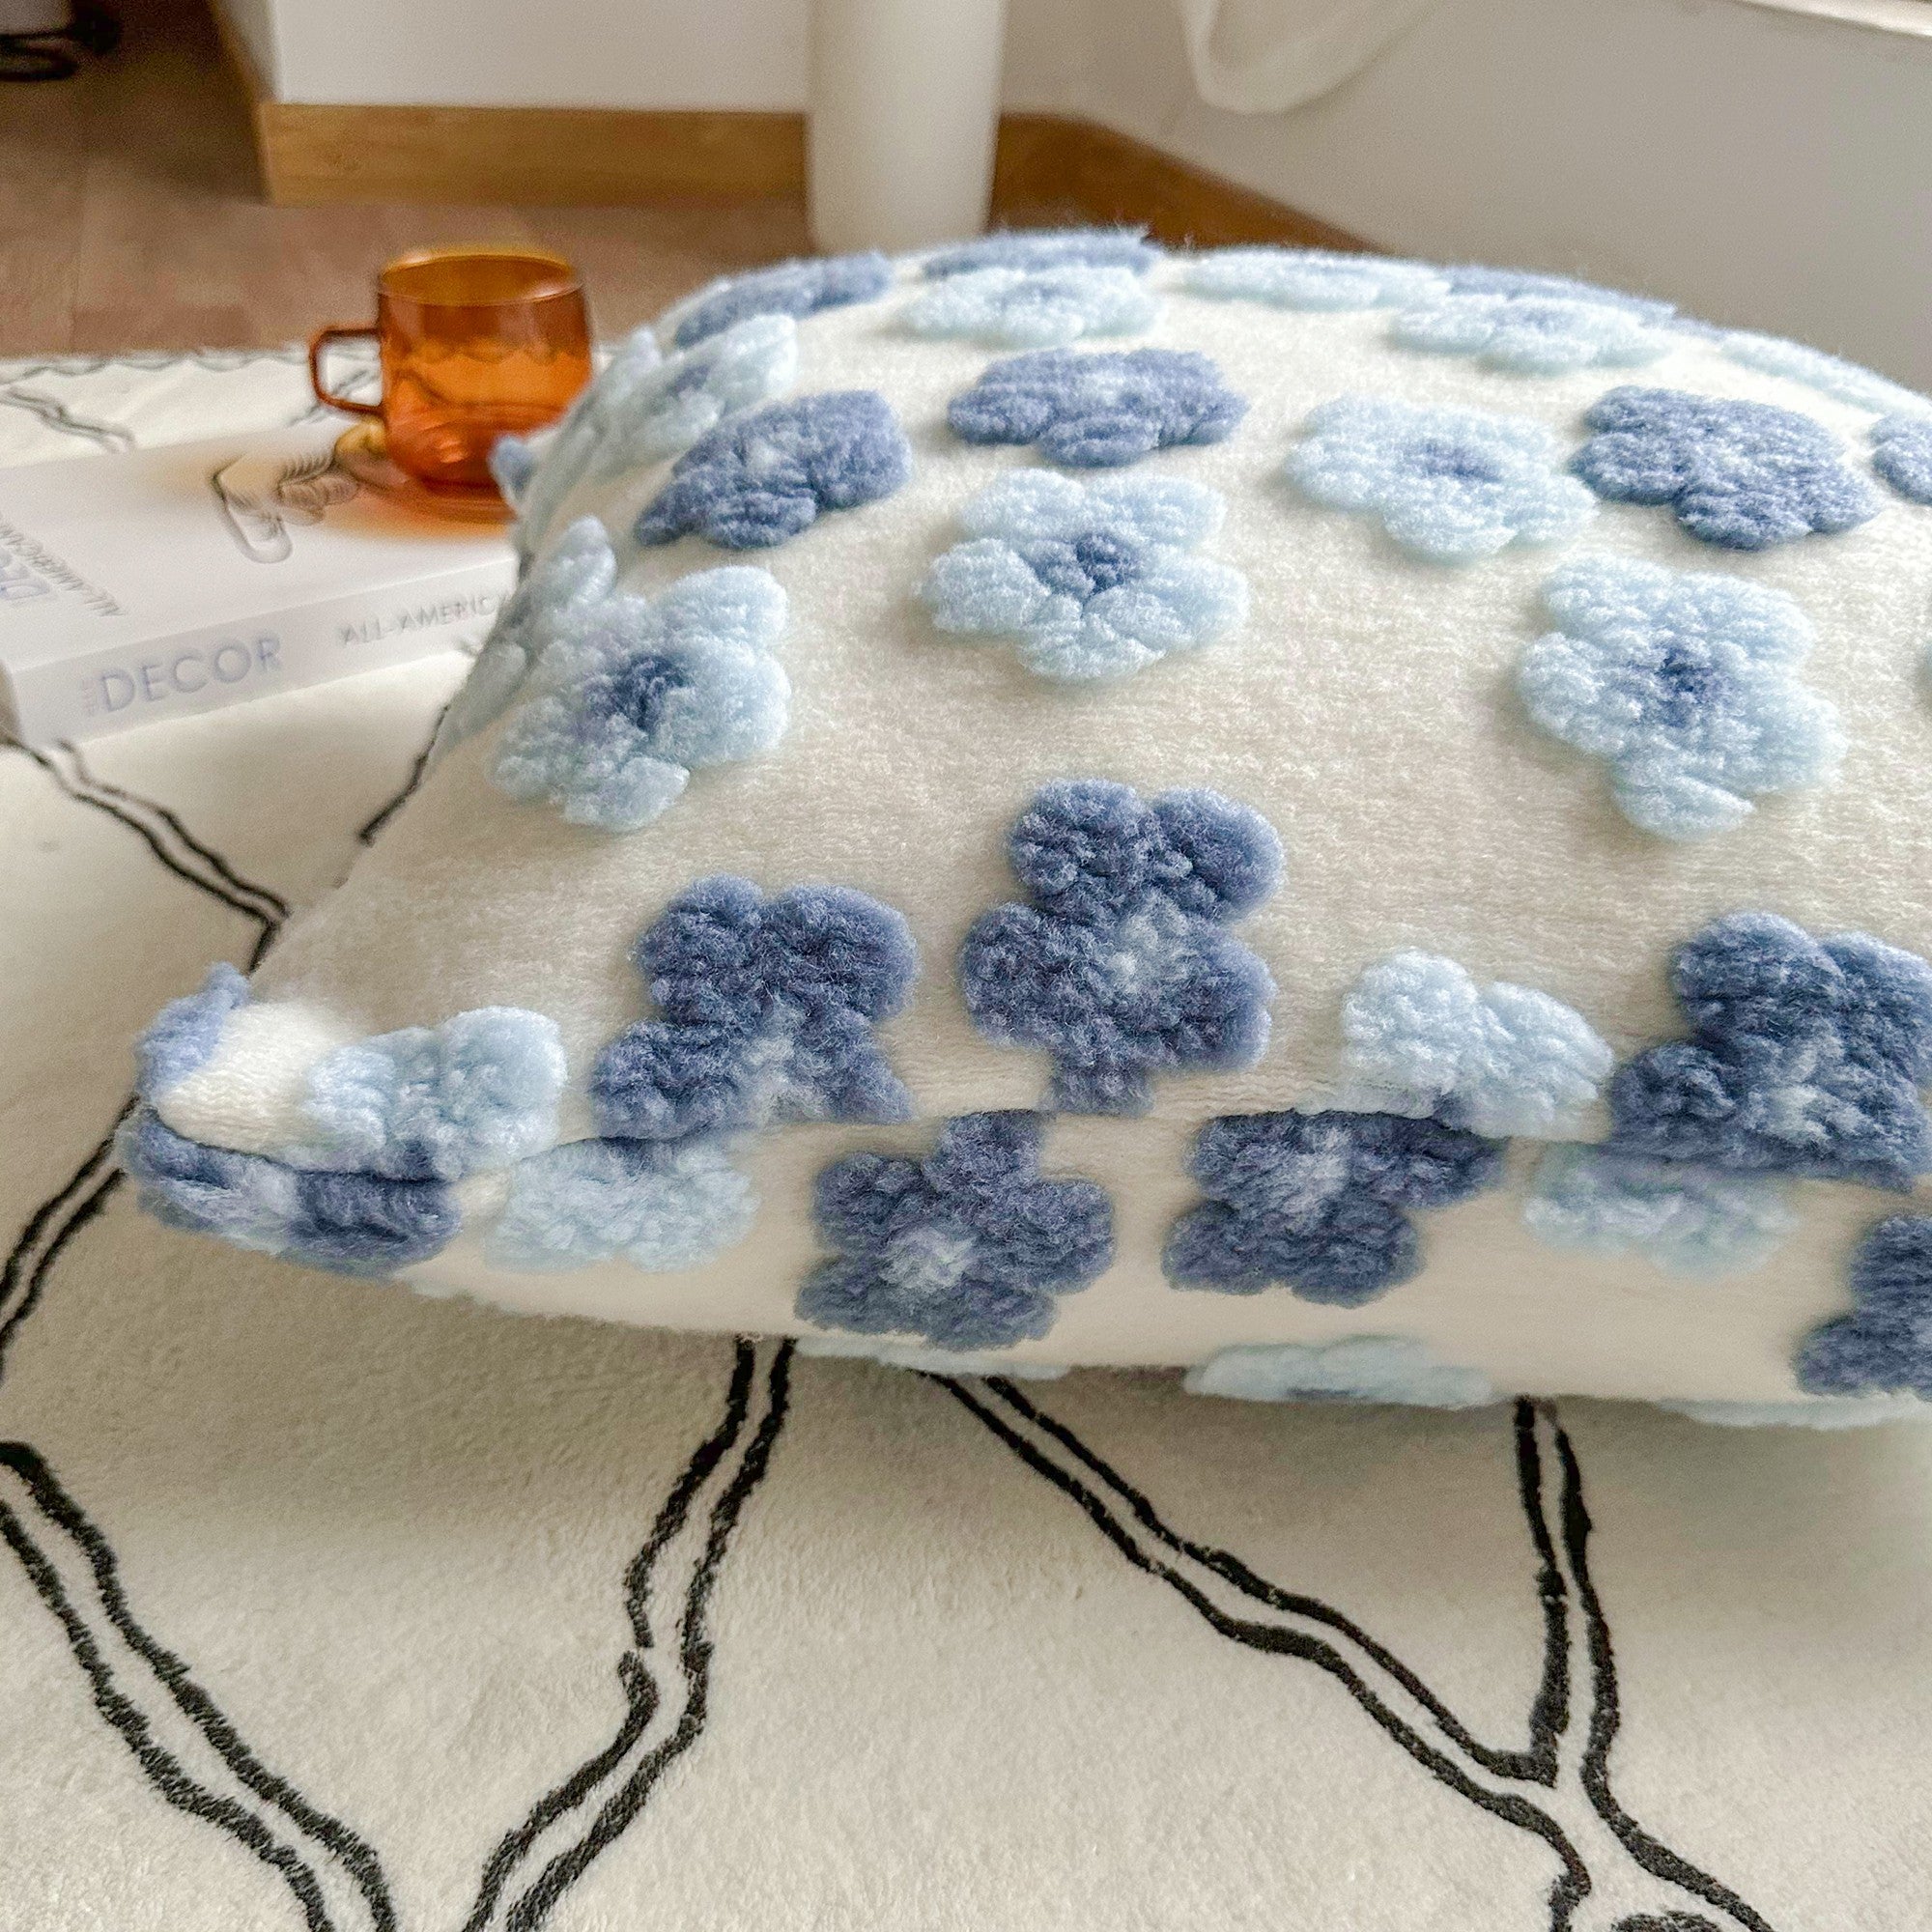 Cute Daisy Pattern Throw Pillows Covers